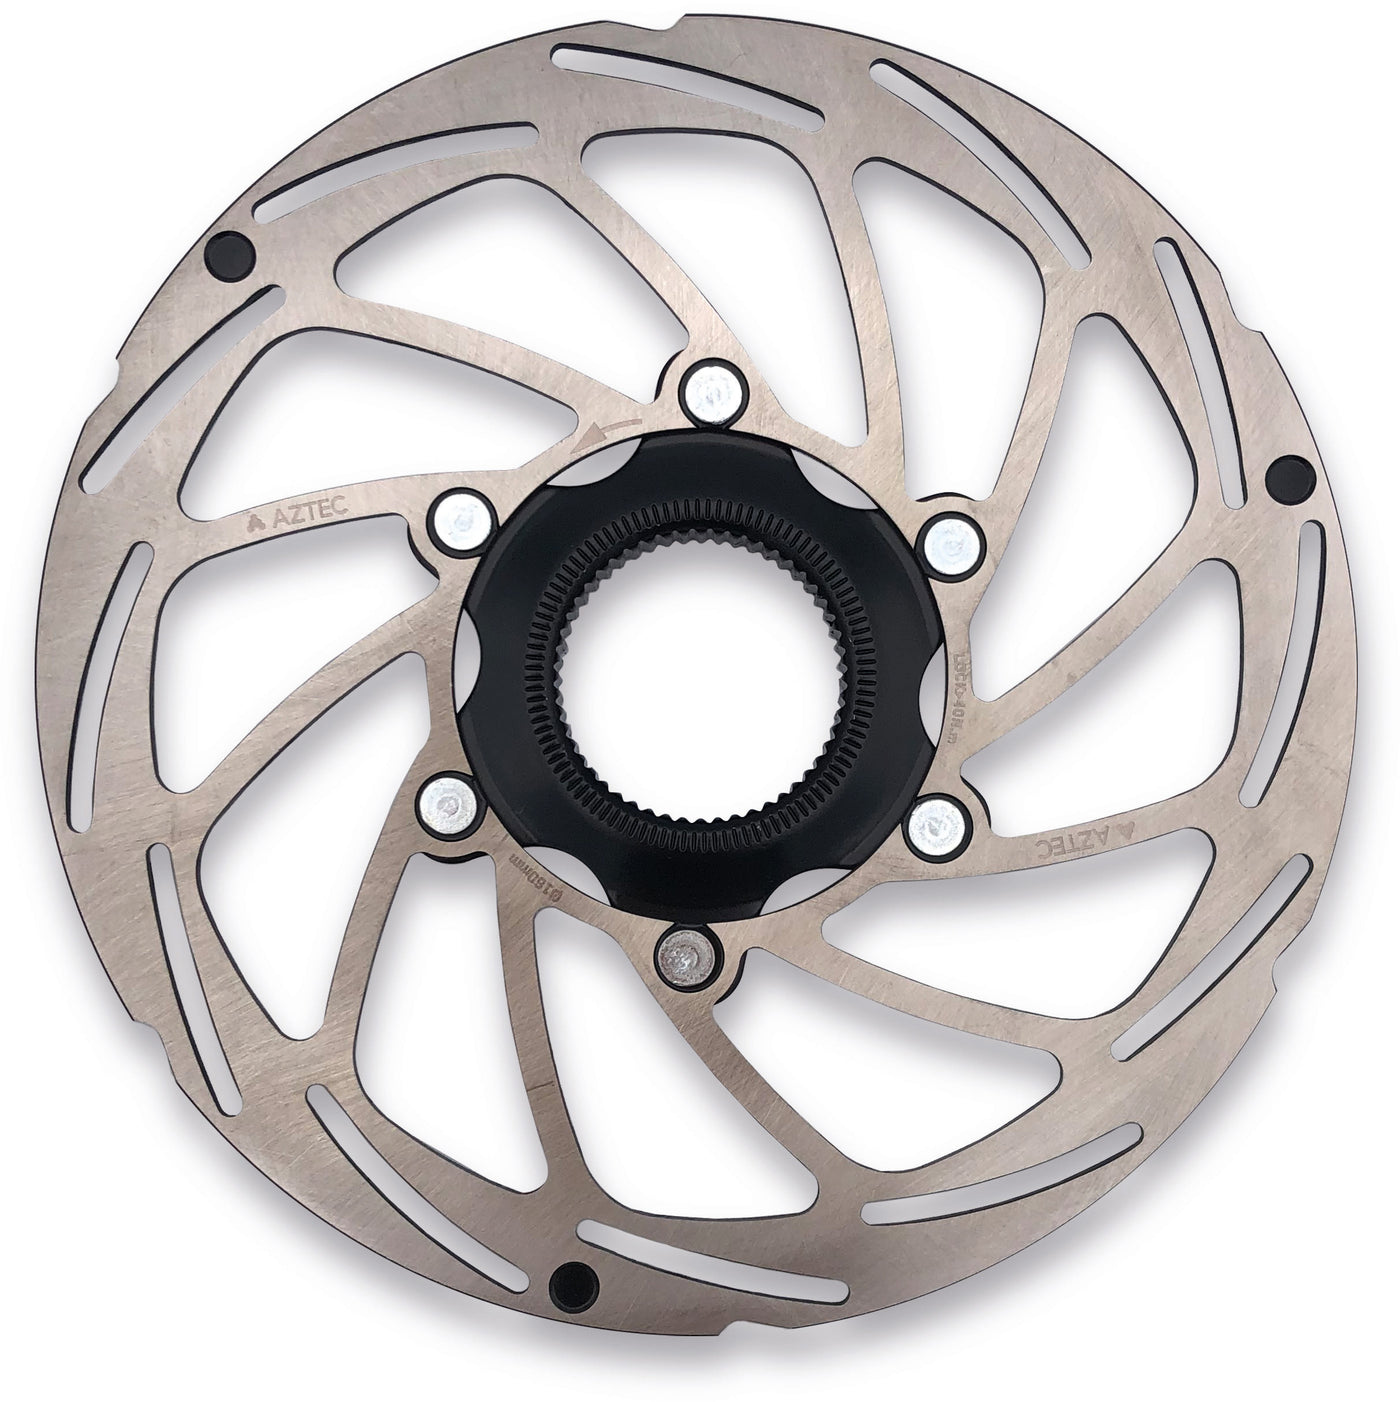 Centre-Lock disc Brake  rotor 180 mm